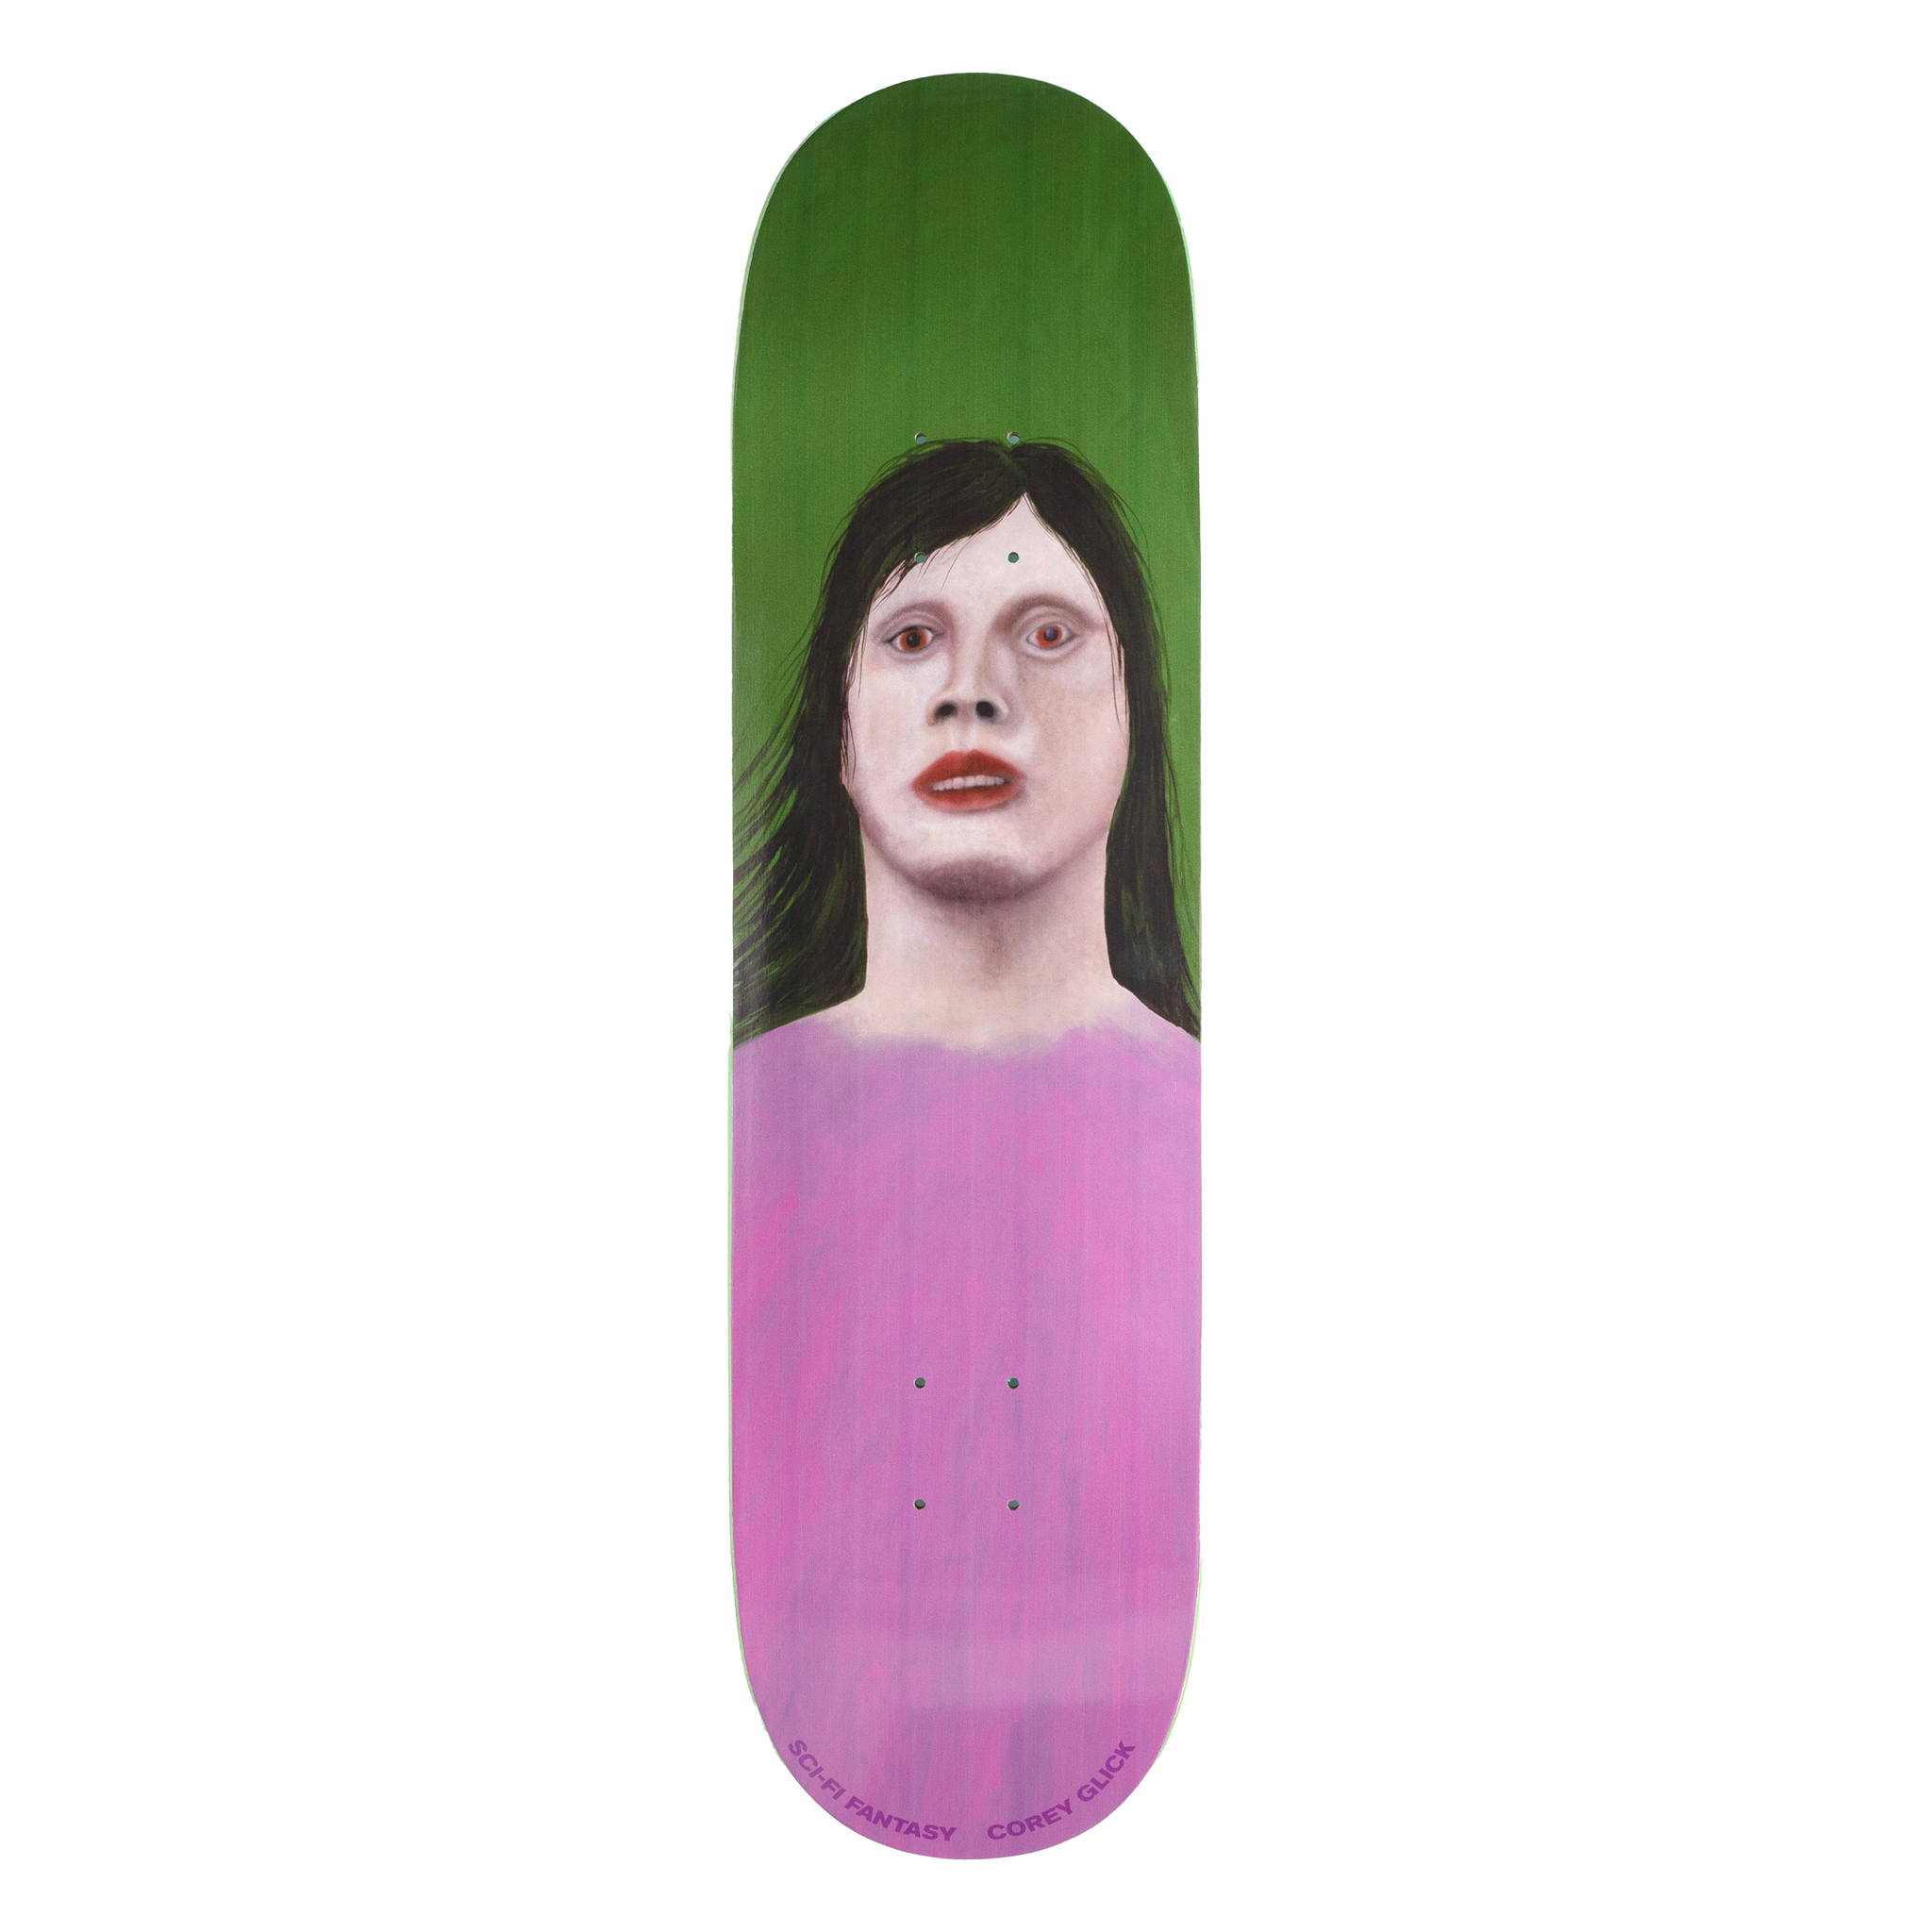 Sci-Fi Fantasy Corey Glick Portrait Skateboard Deck - Apple Valley Emporium